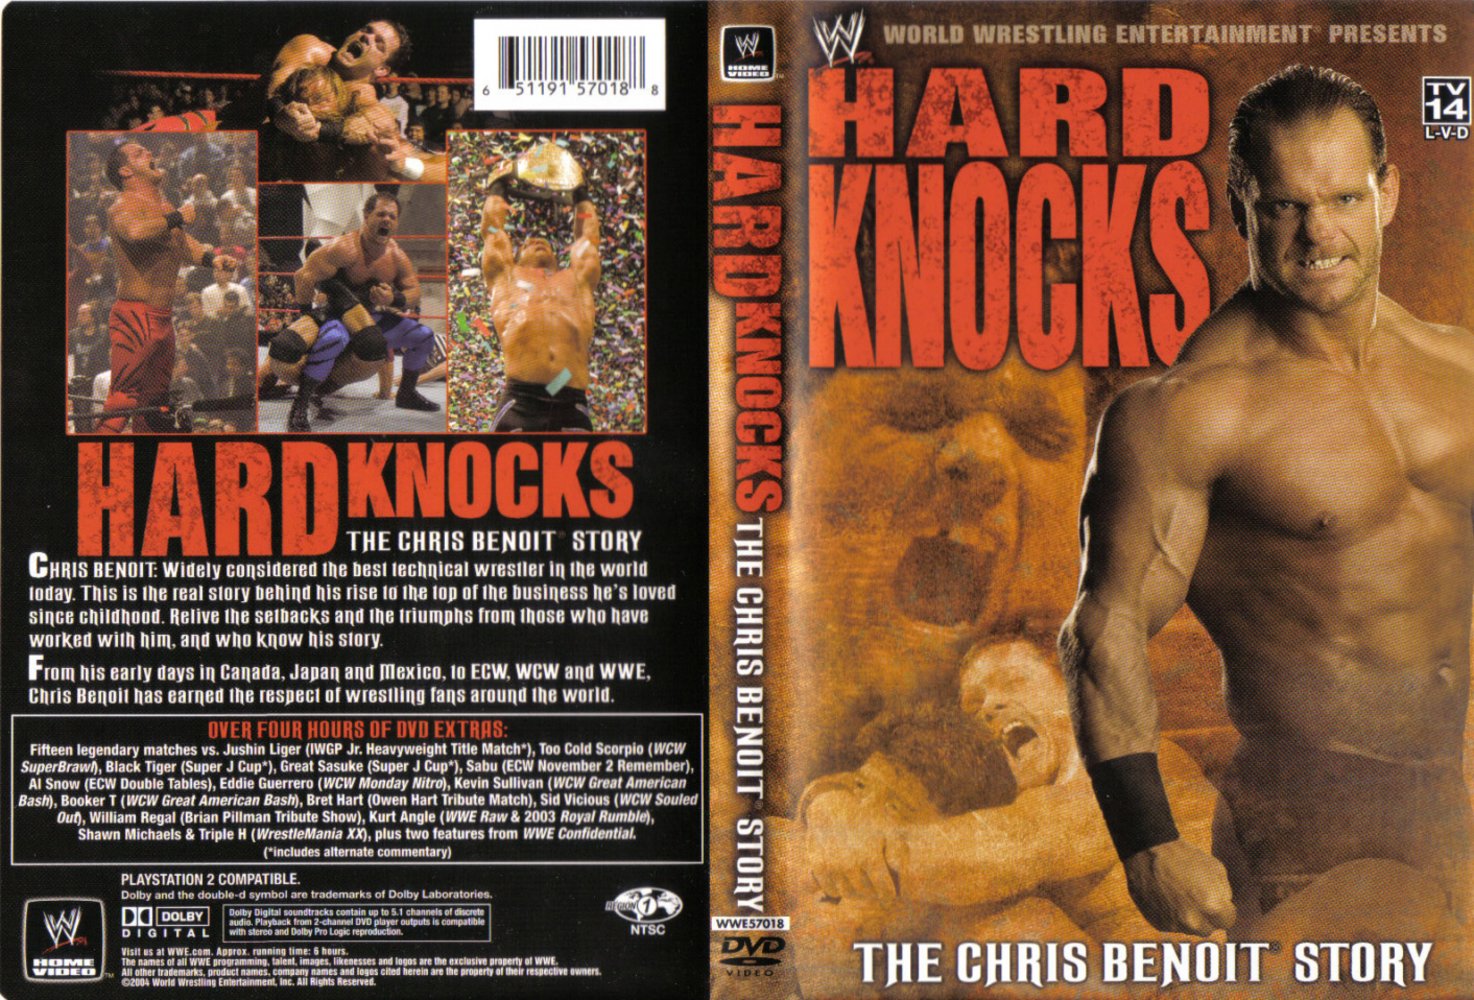 Jaquette DVD WWE Hard Knocks Chris Benoit Story